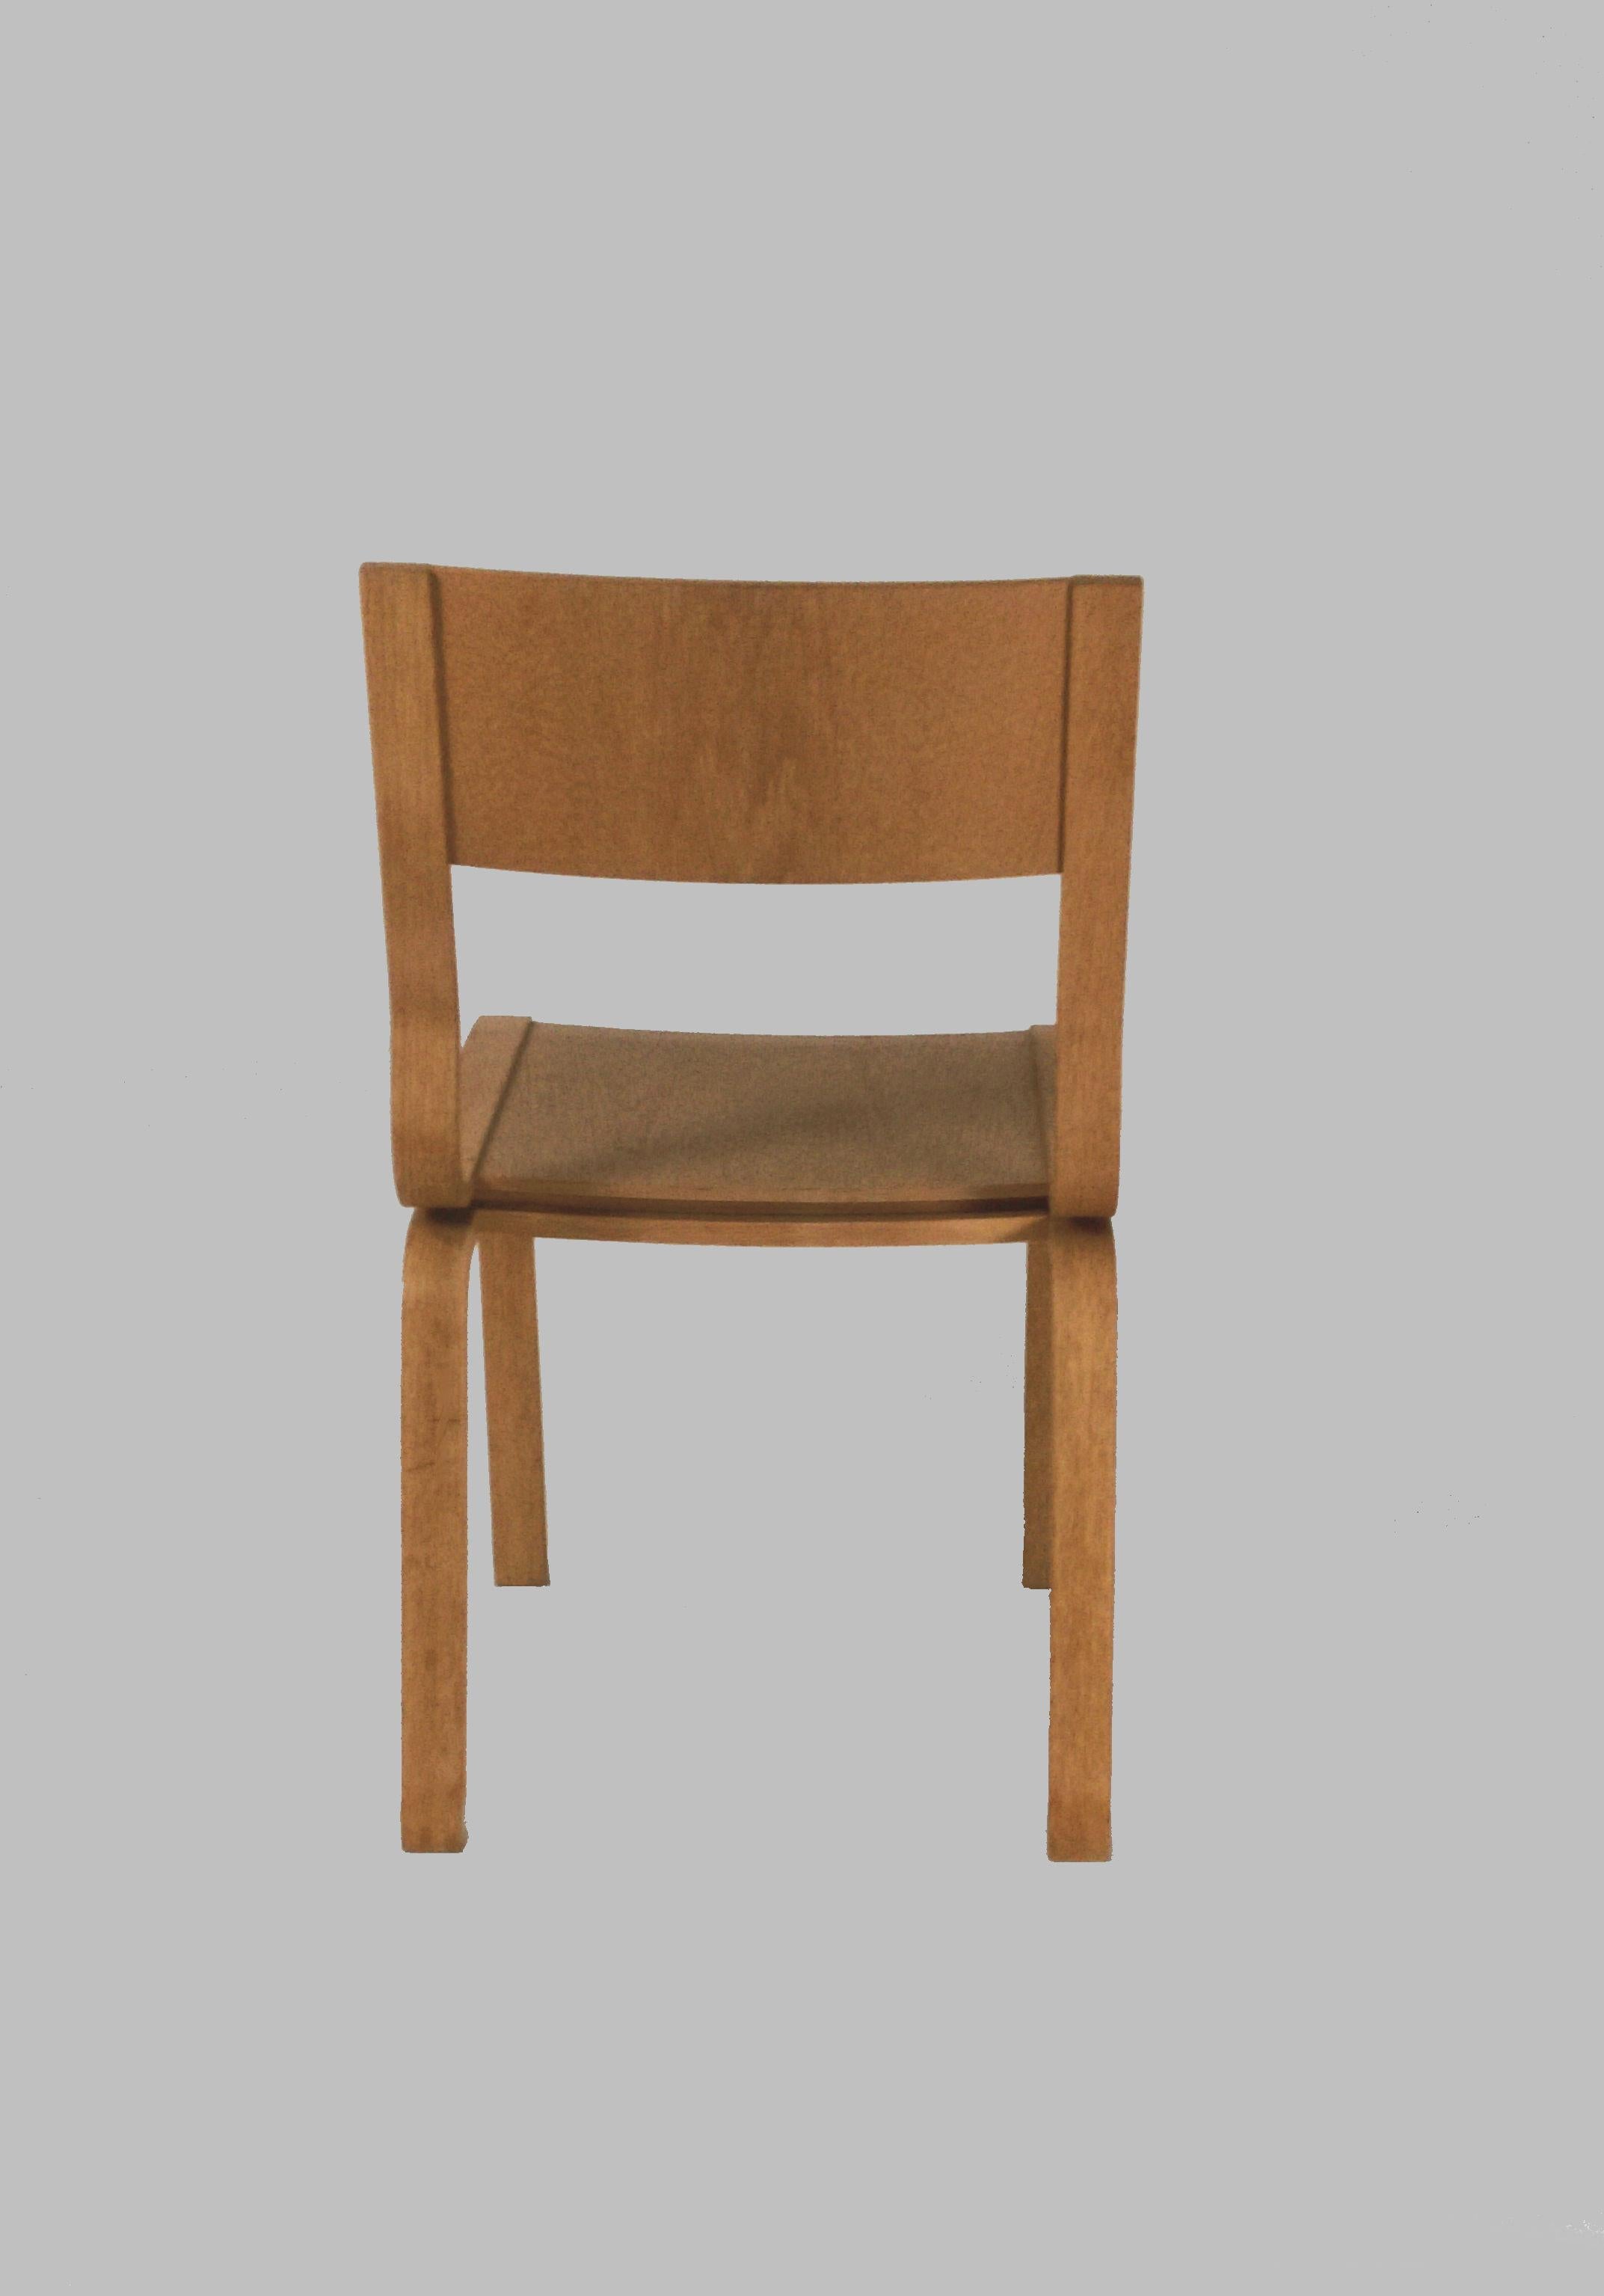 1965 Arne Jacobsen Saint Catherines Chair in Laminated Oak by Fritz Hansen In Good Condition In Knebel, DK